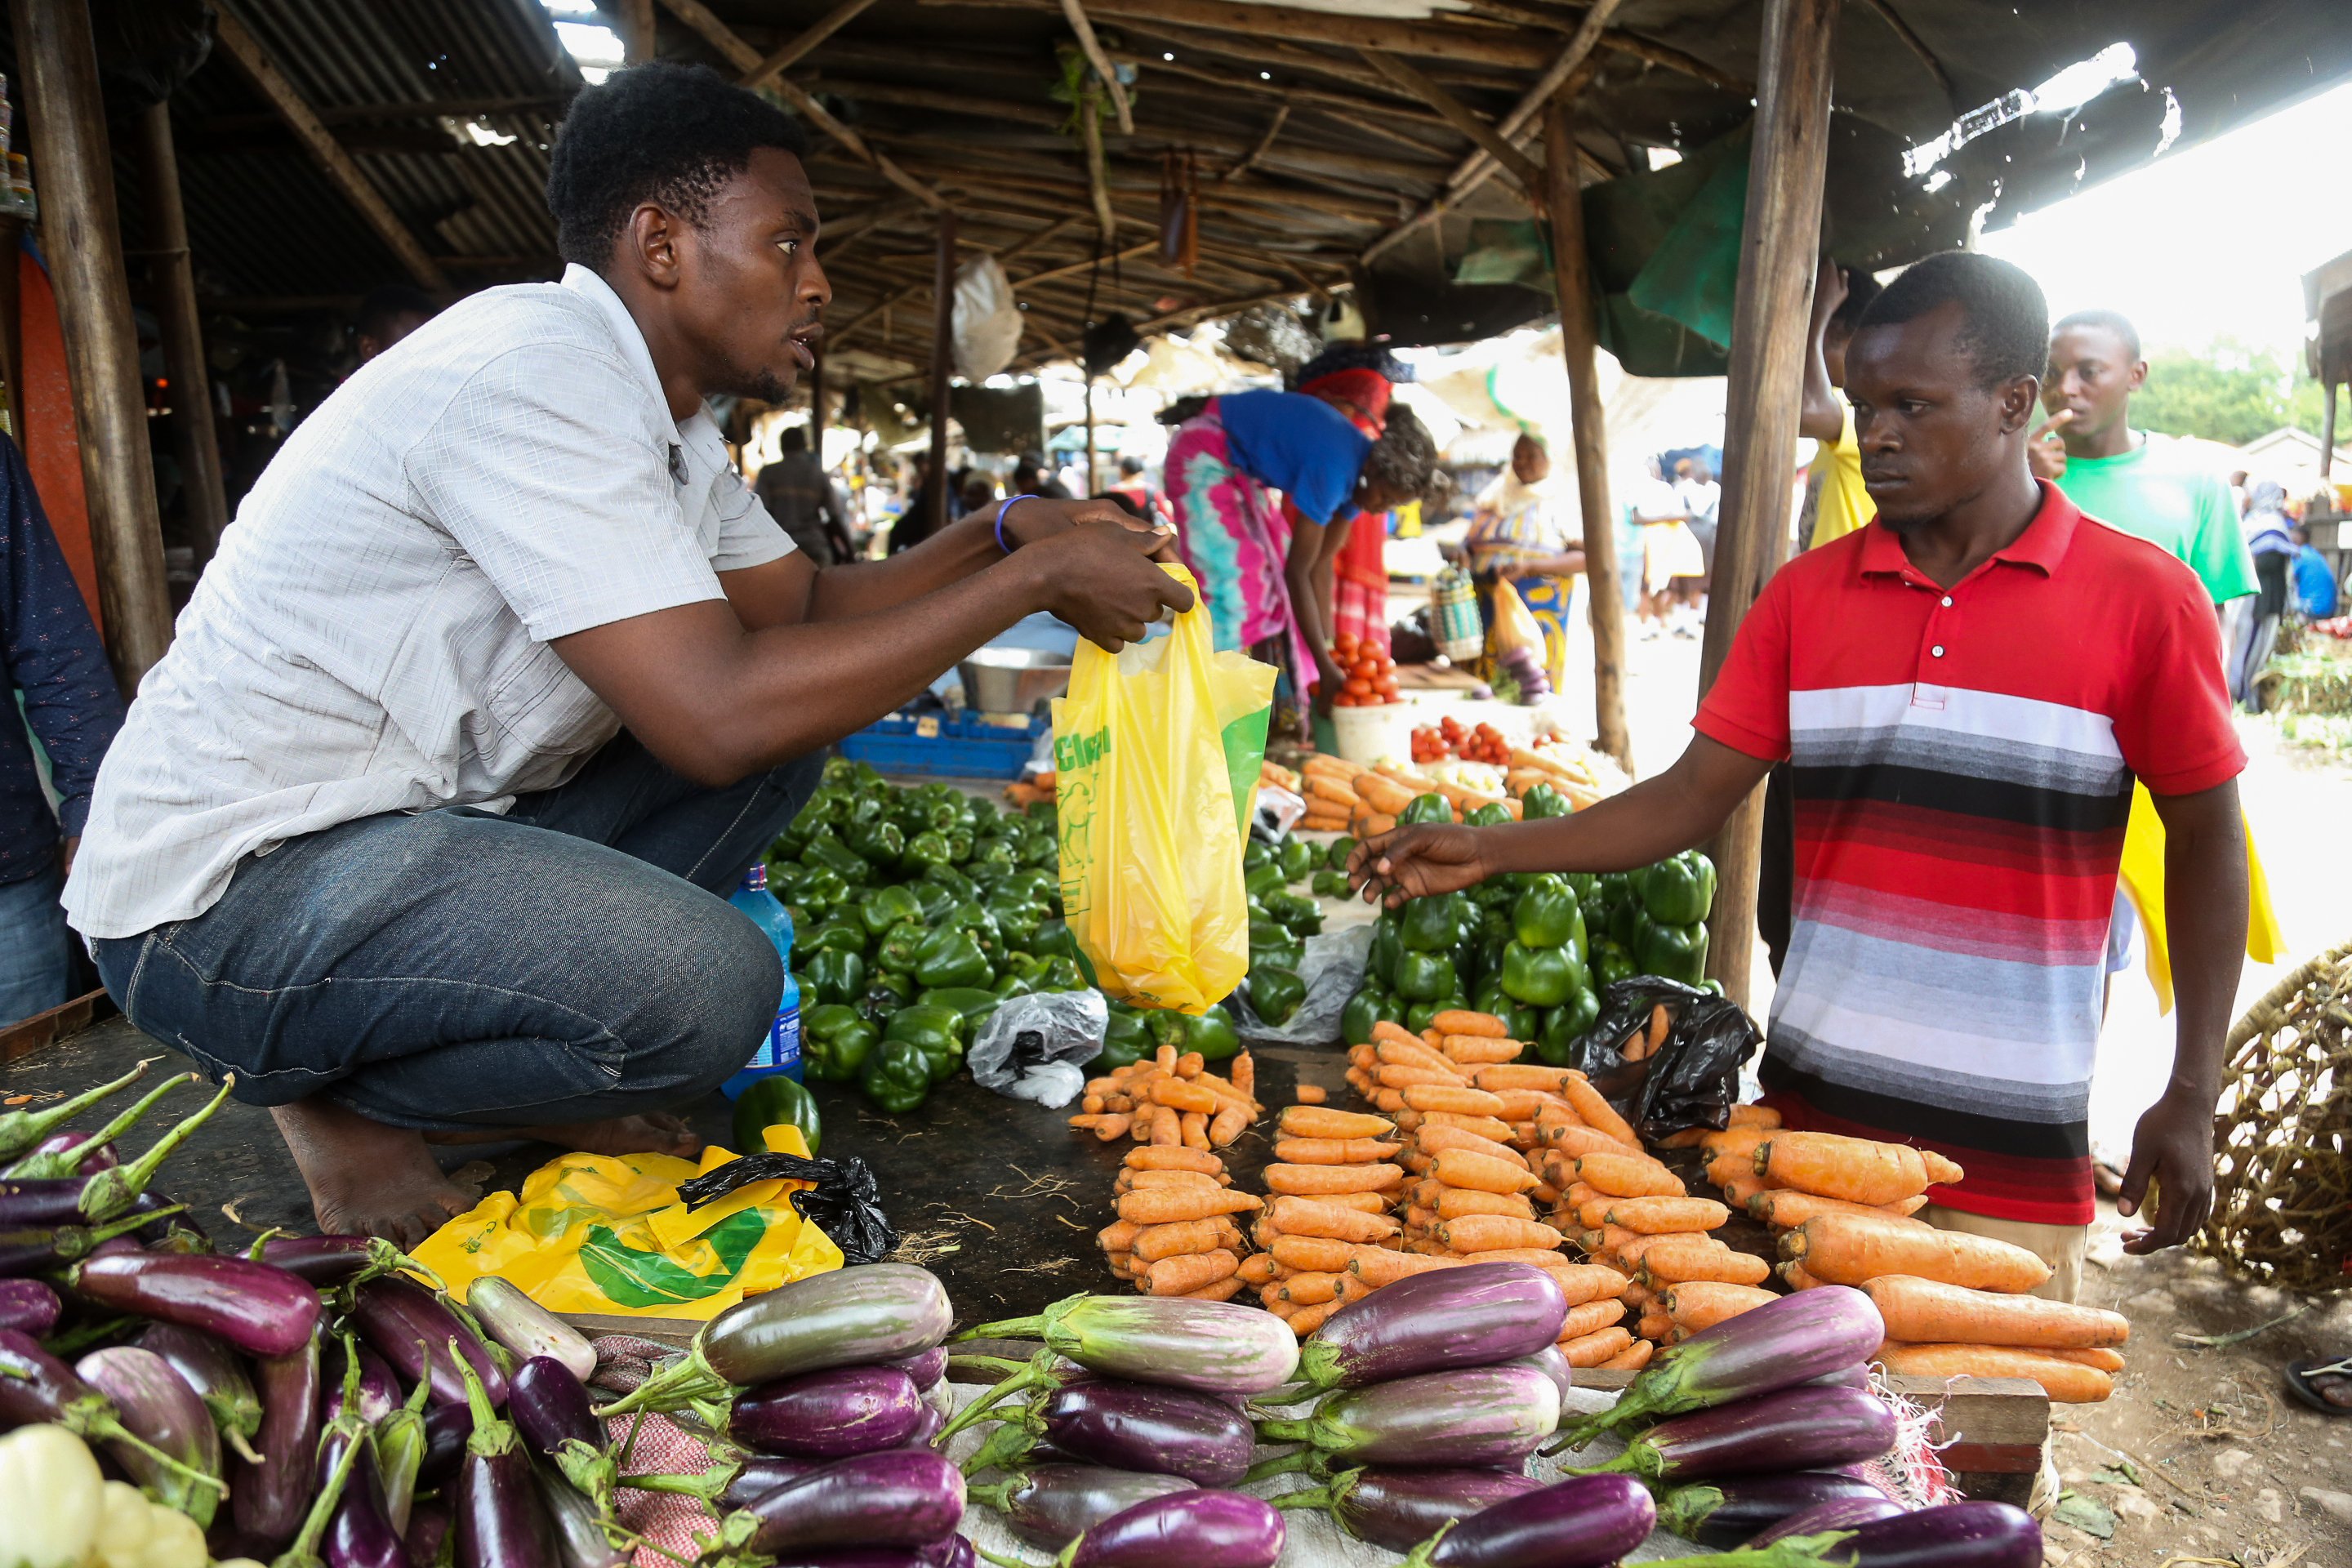 A Dar es Salaam-i piac 2019. június 1-én.